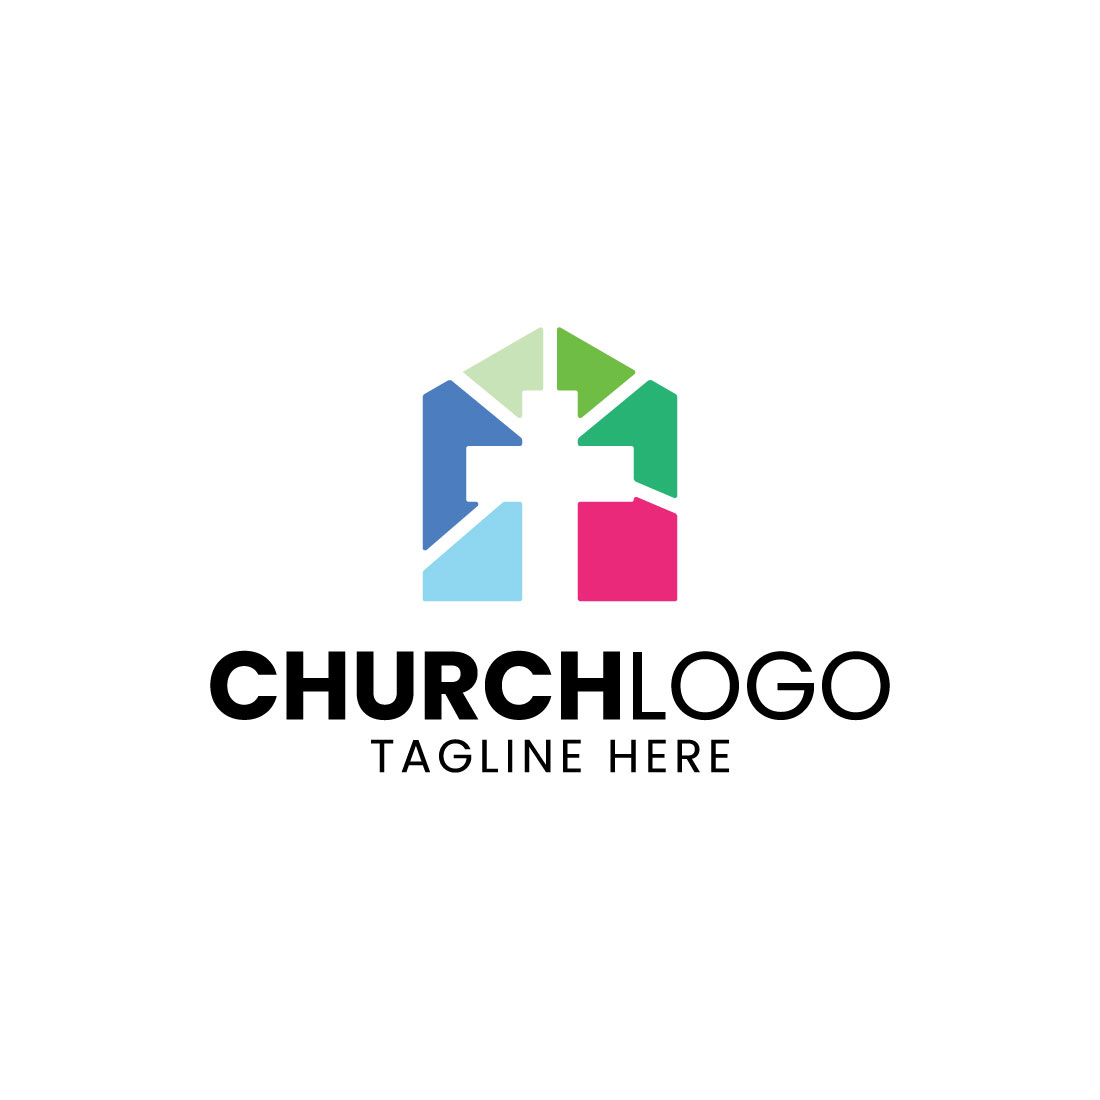 Colorful Church Logo Mosaic Design cover image.